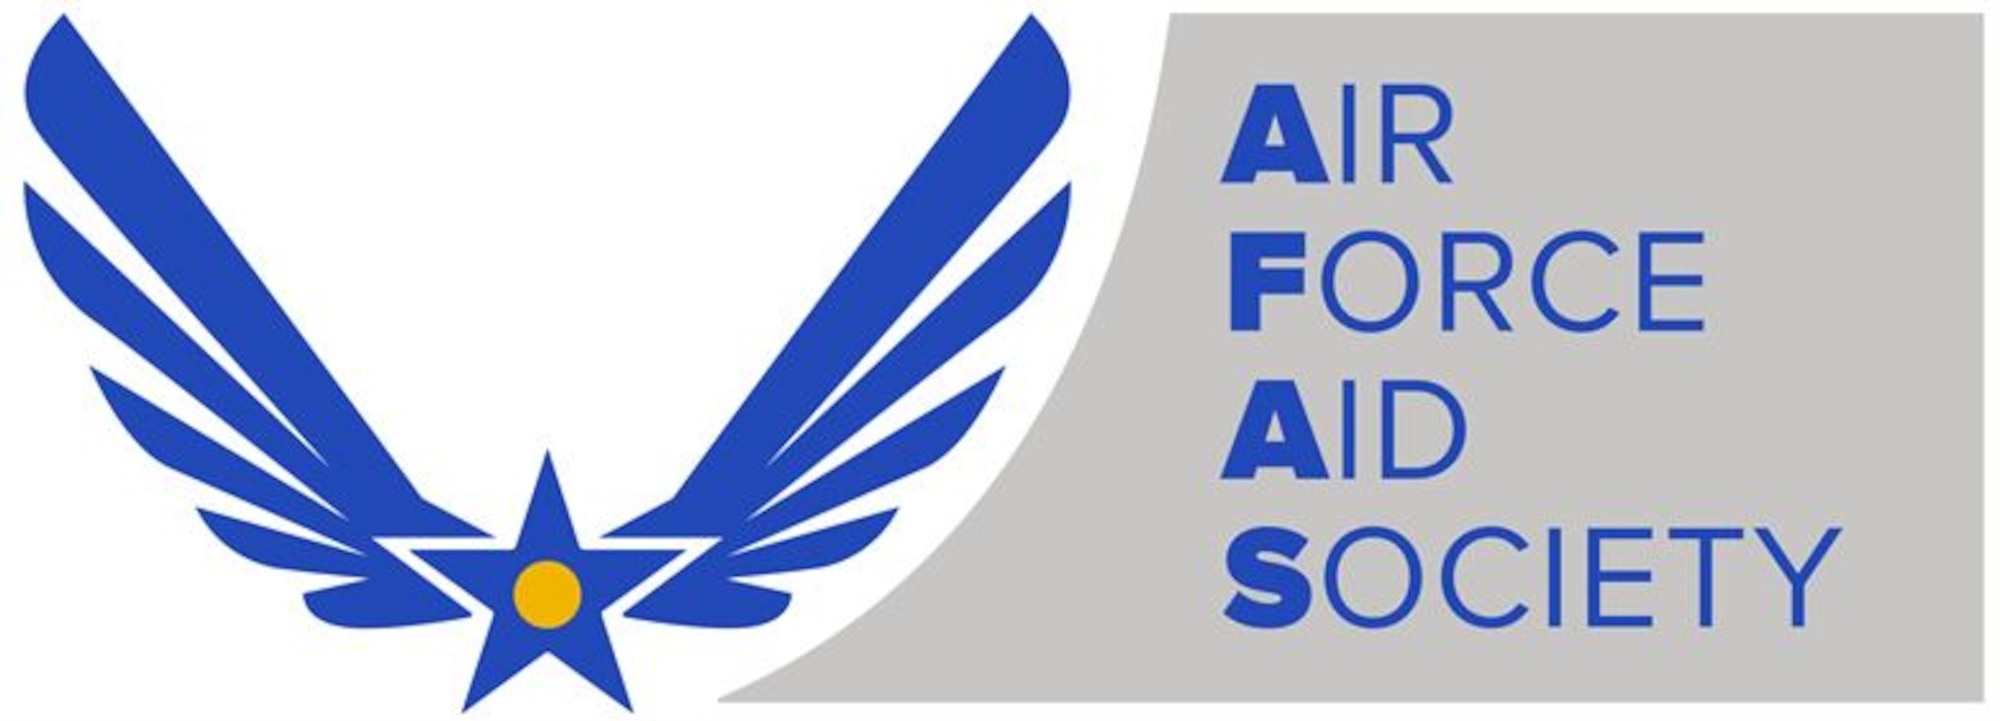 Air Force Air Society